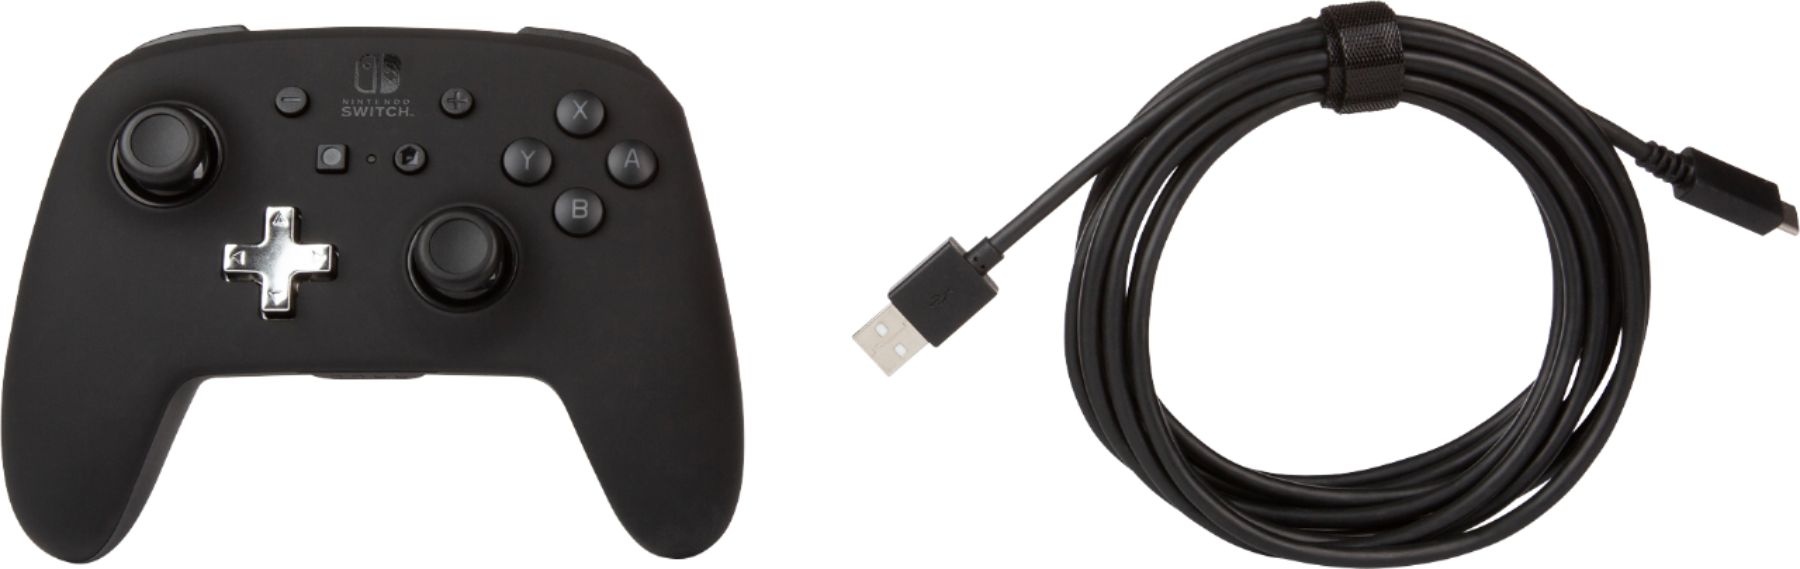 PowerA Enhanced Wireless Controller for Nintendo Switch - White